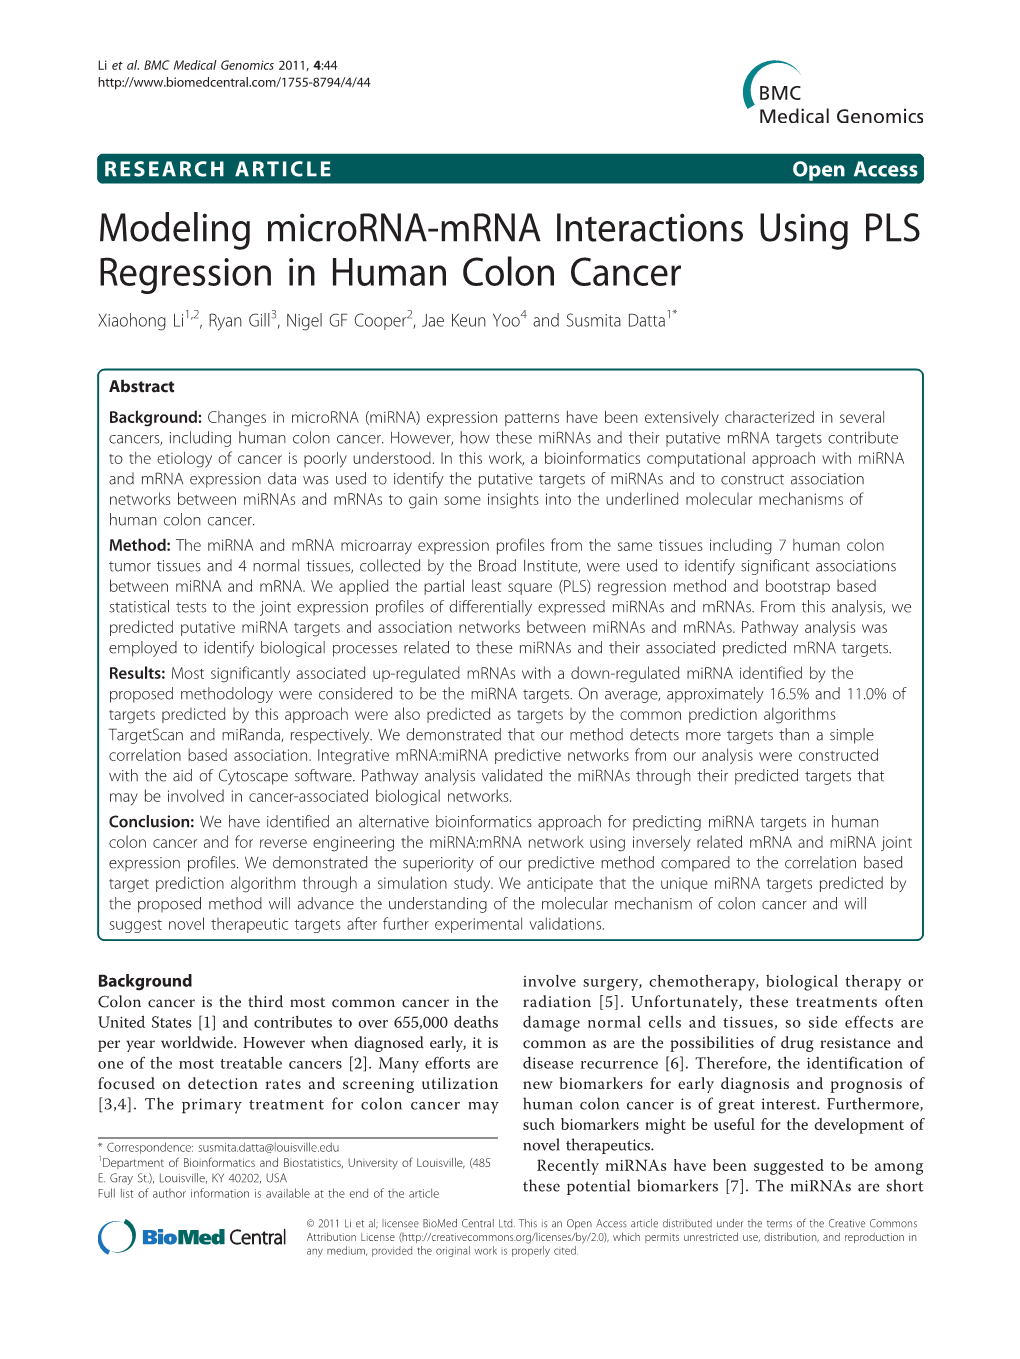 Modeling Microrna-Mrna Interactions Using PLS Regression in Human Colon Cancer Xiaohong Li1,2, Ryan Gill3, Nigel GF Cooper2, Jae Keun Yoo4 and Susmita Datta1*